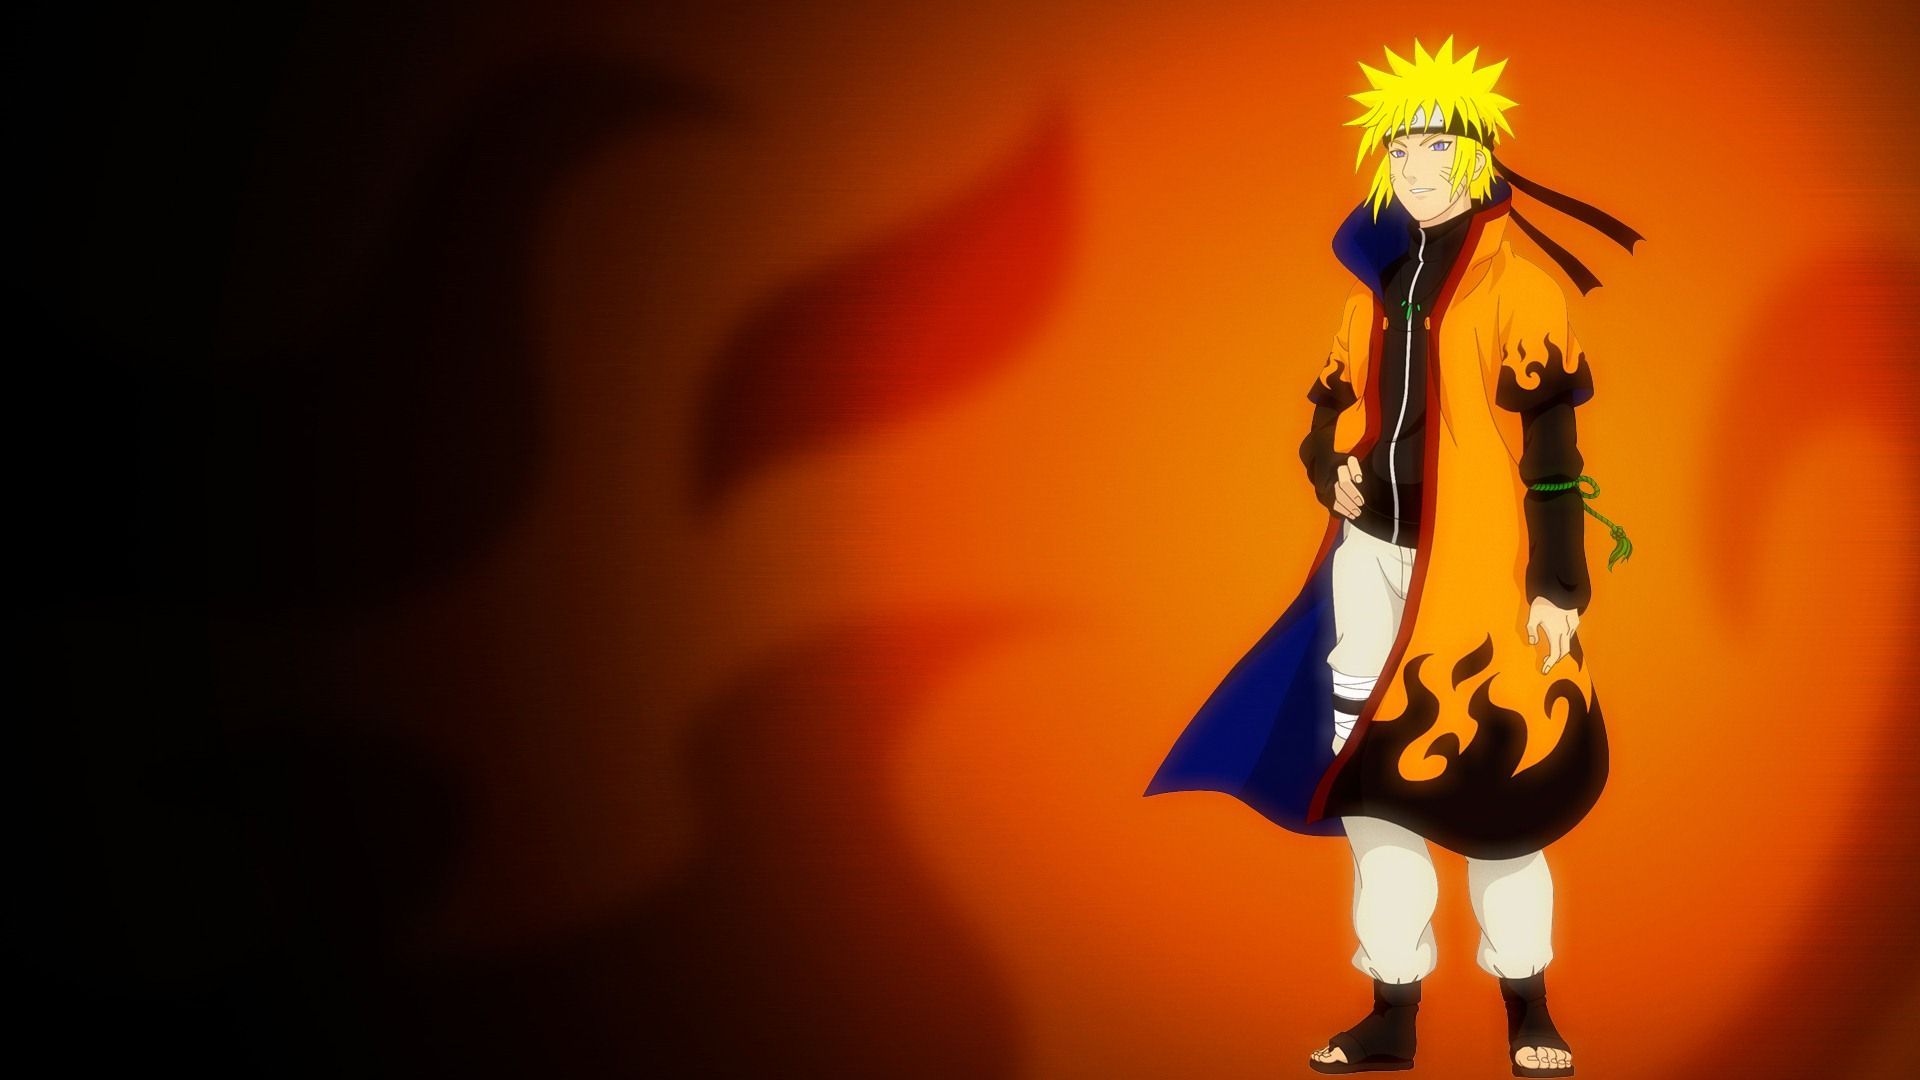 Naruto Wallpaper Background Free Downloads #3211 Wallpaper | High ...